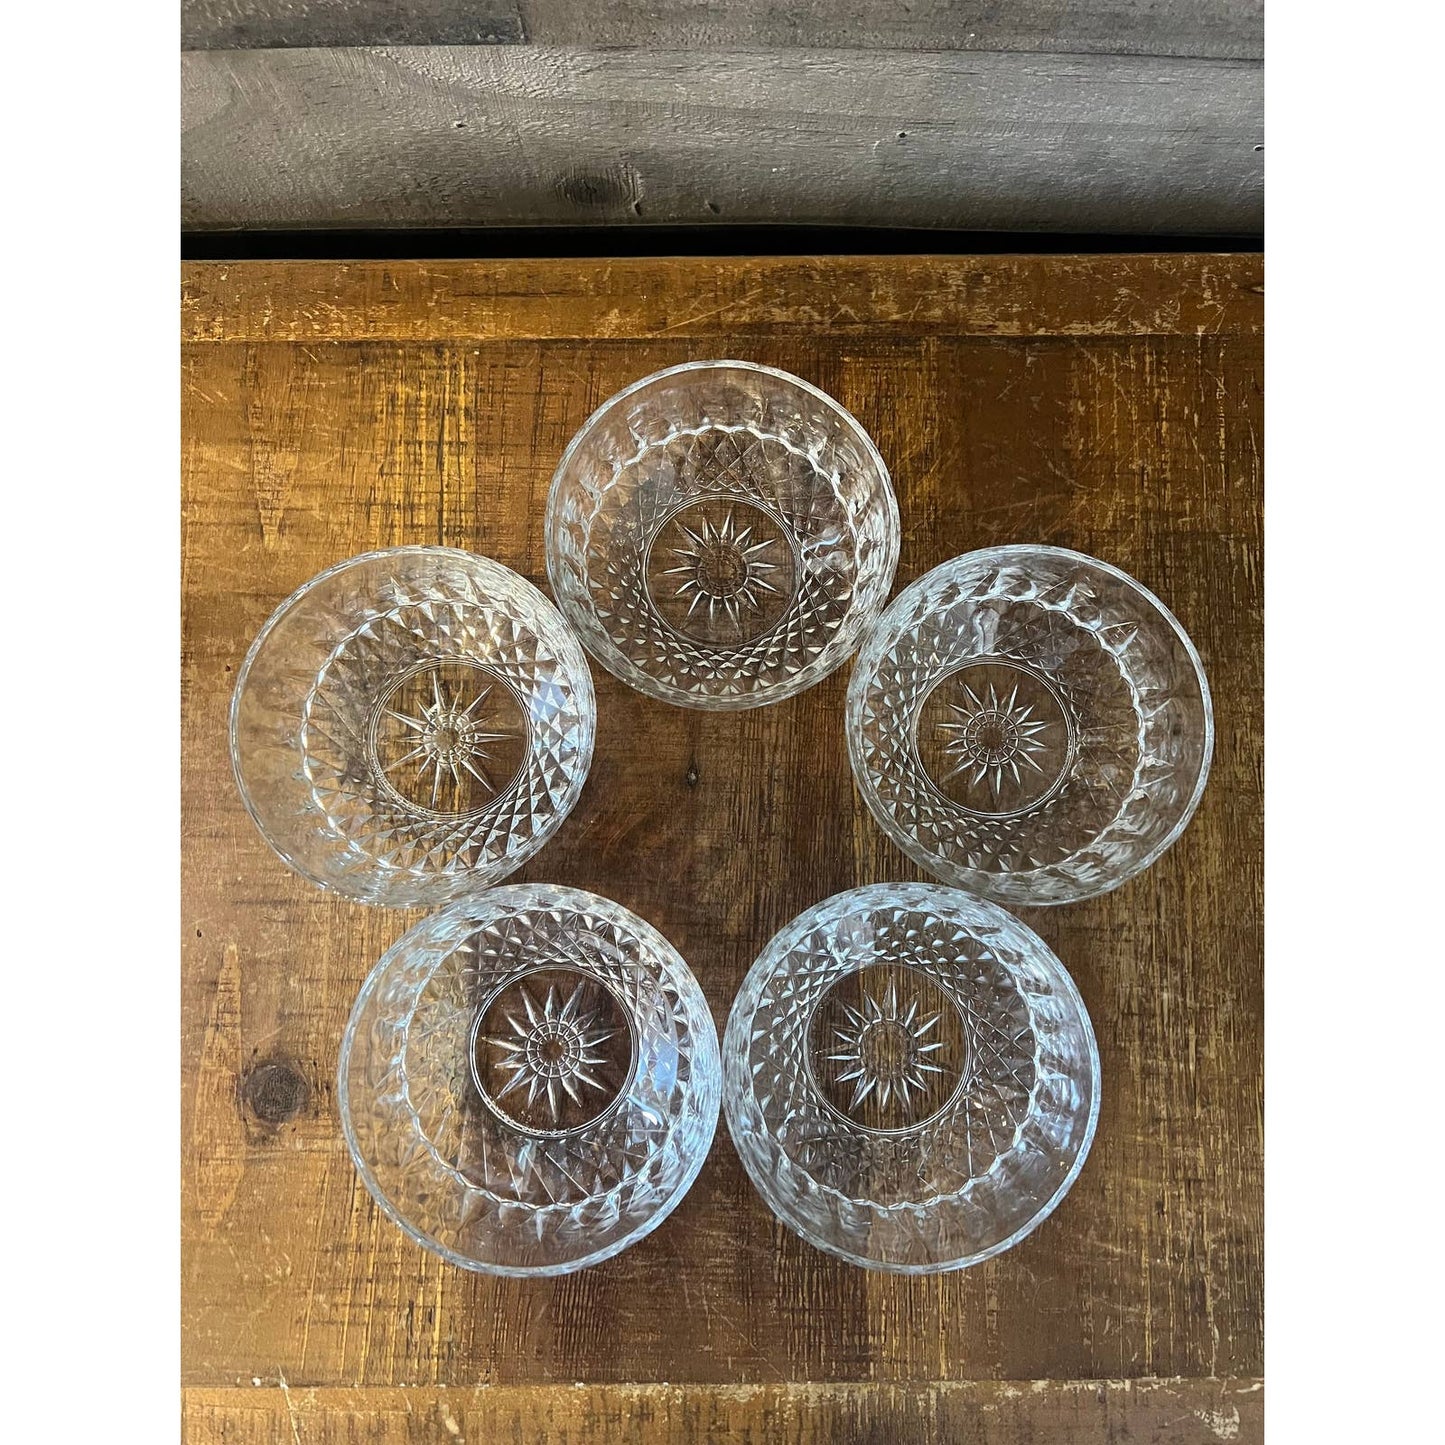 Vintage set of 5 arcoroc france 4 inch clear glass starburst pattern bowls